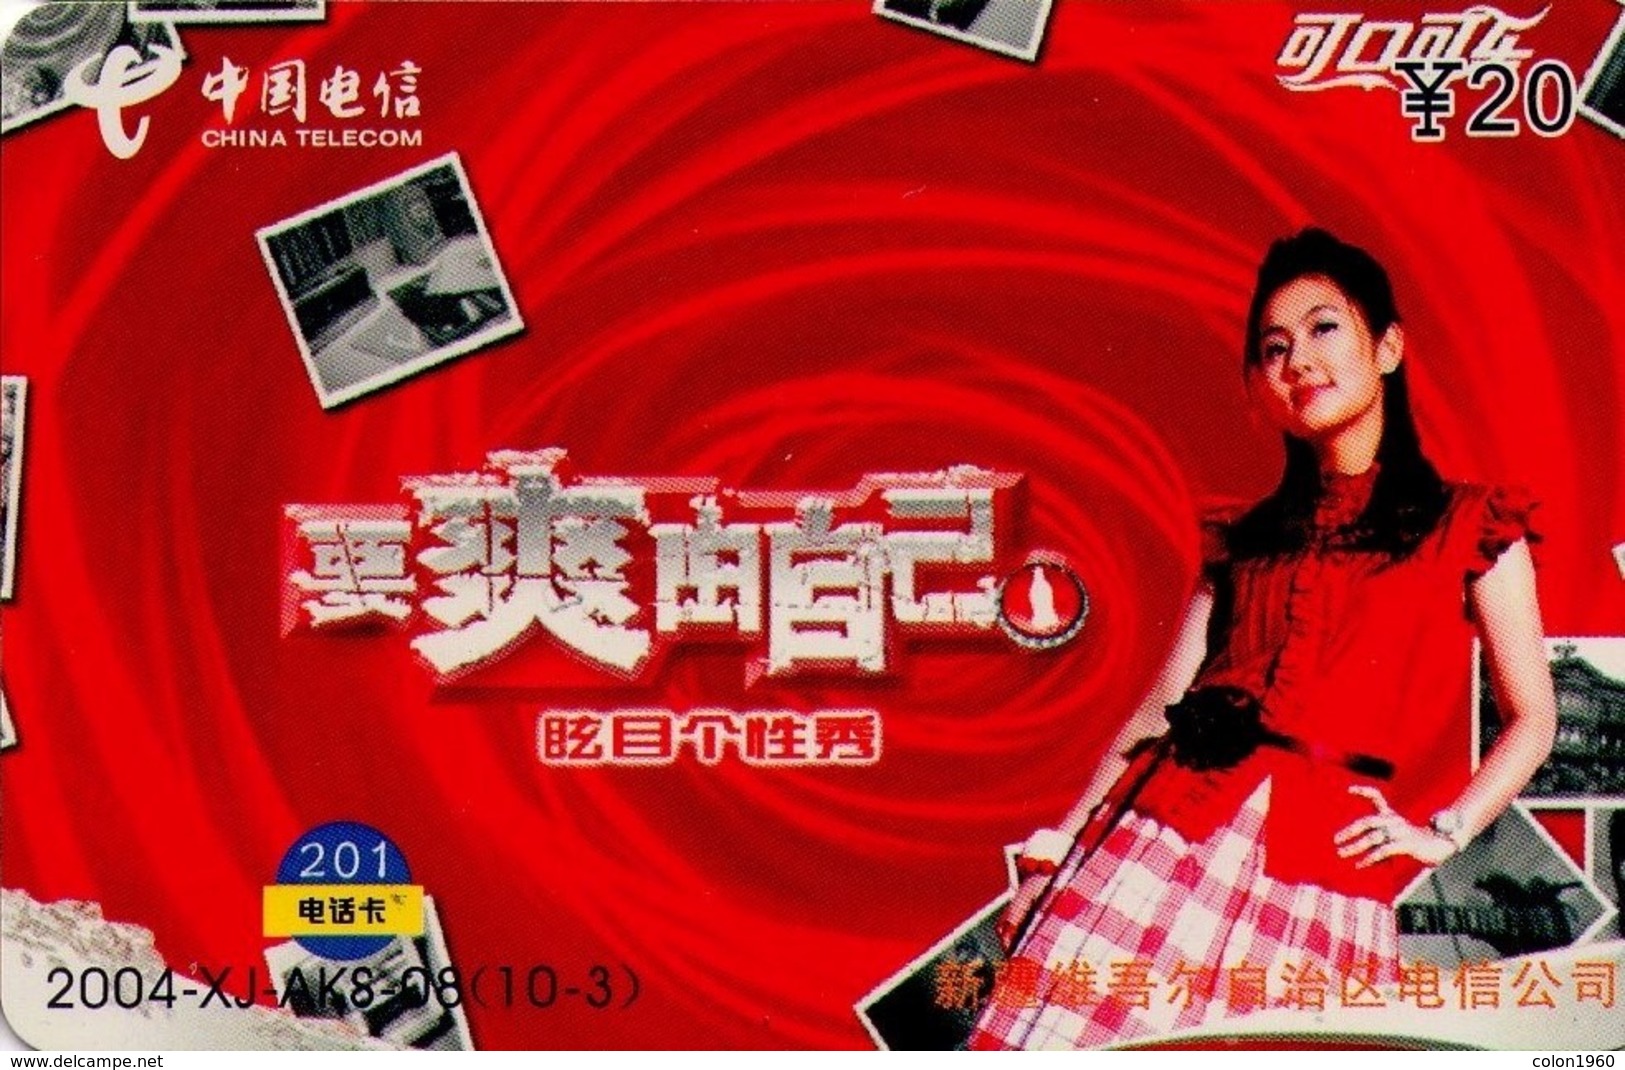 CHINA. COCA COLA. GIRL. 2004-XJ-AKS-08(10-3). (739) - China